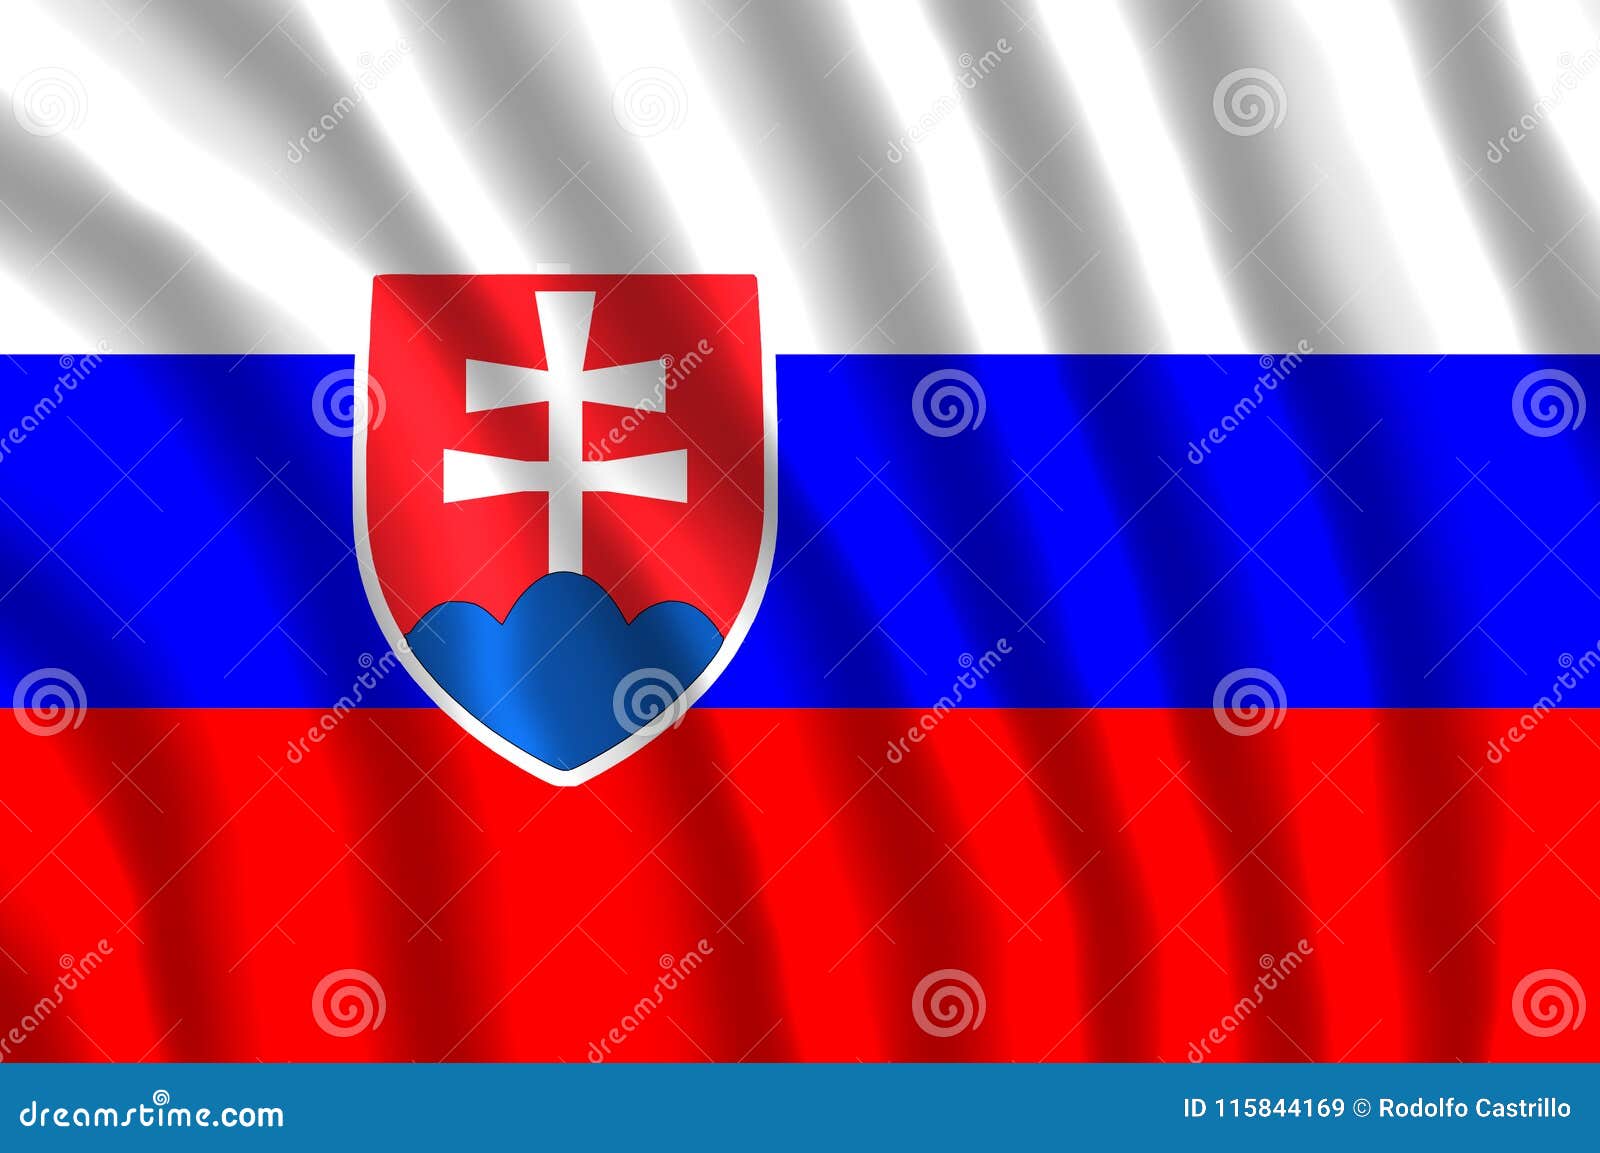 eslovaquia flag fluttering.